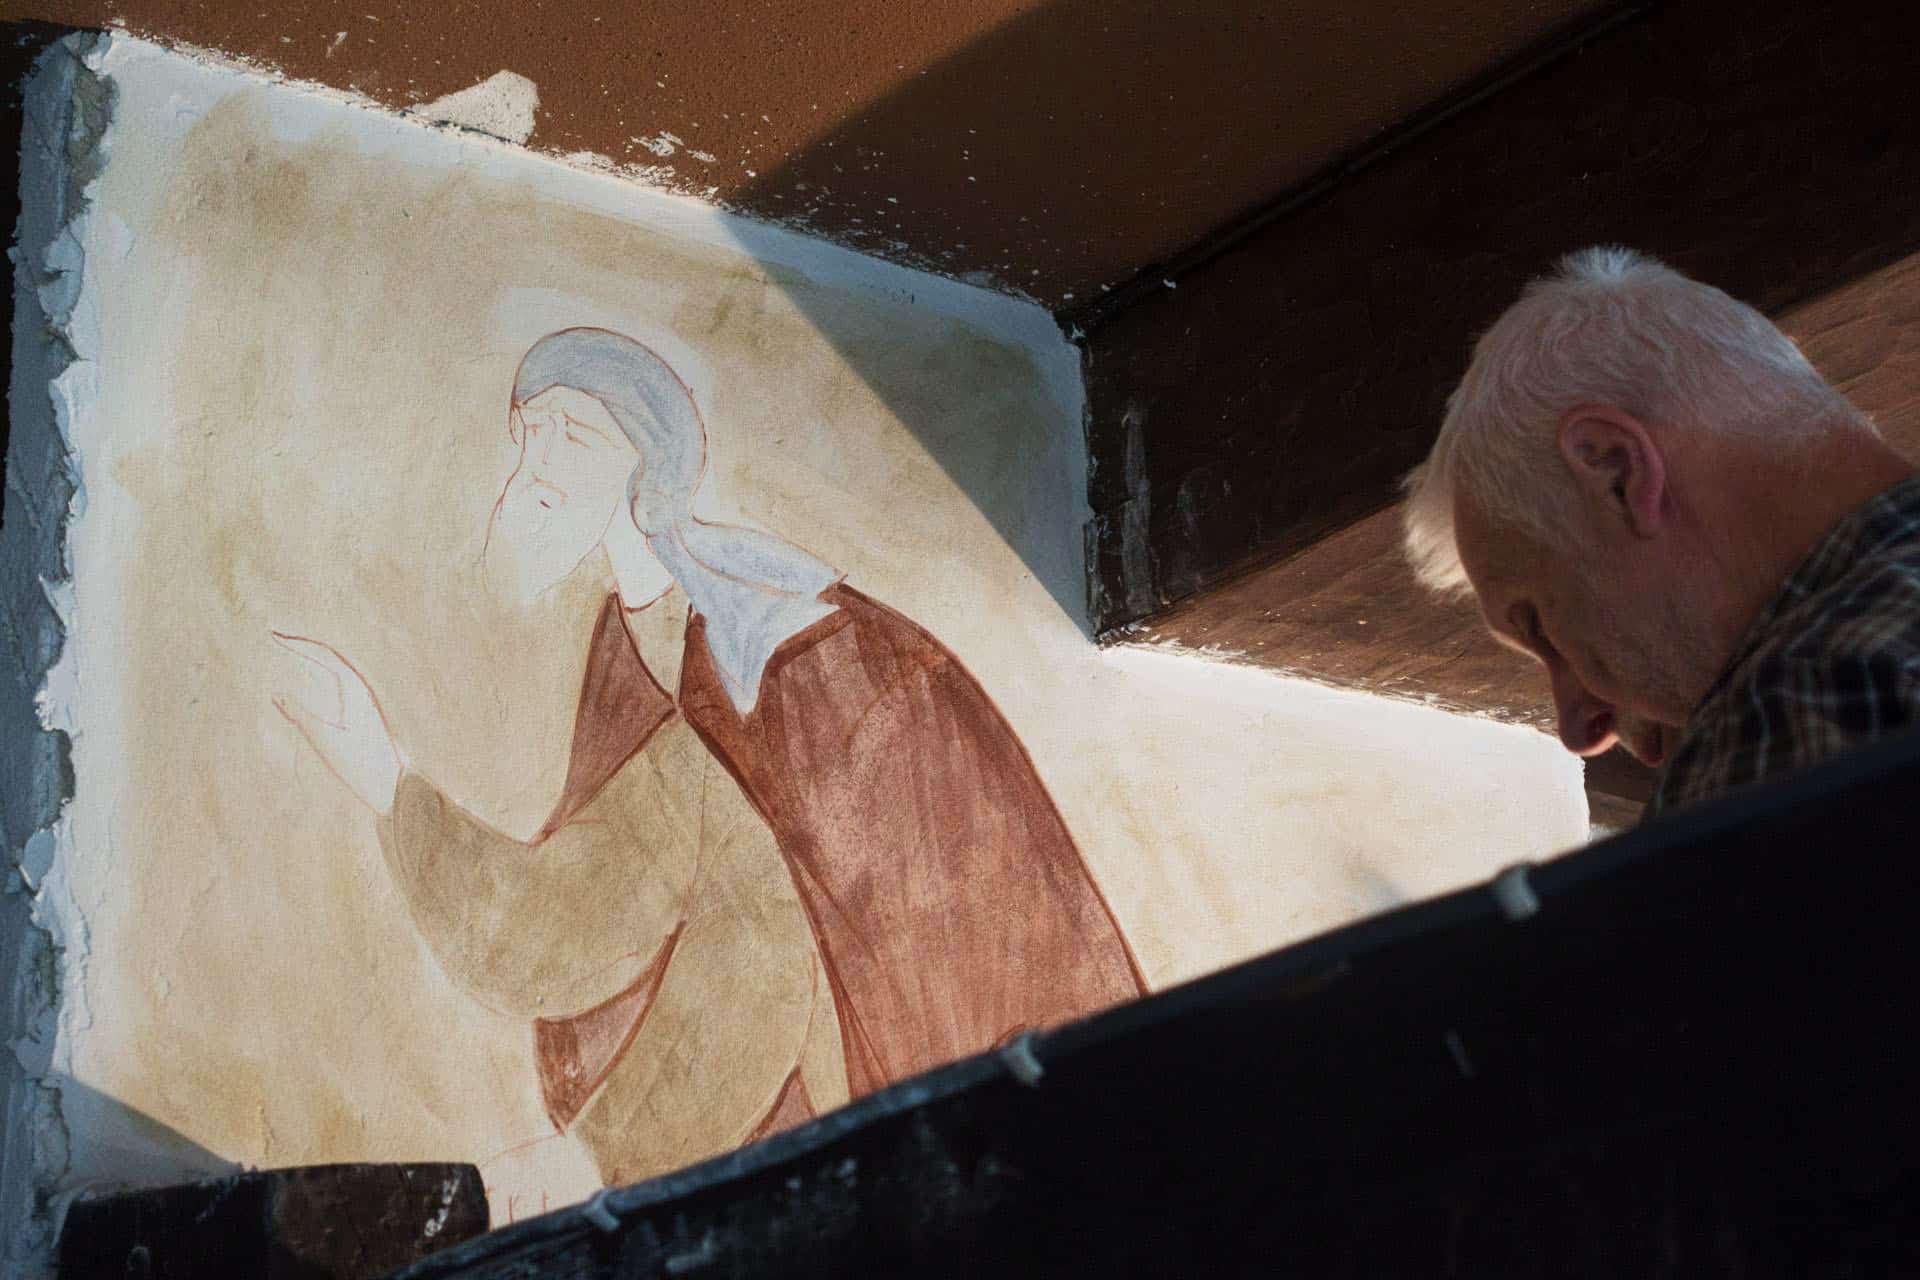 Van Ael and the fresco process